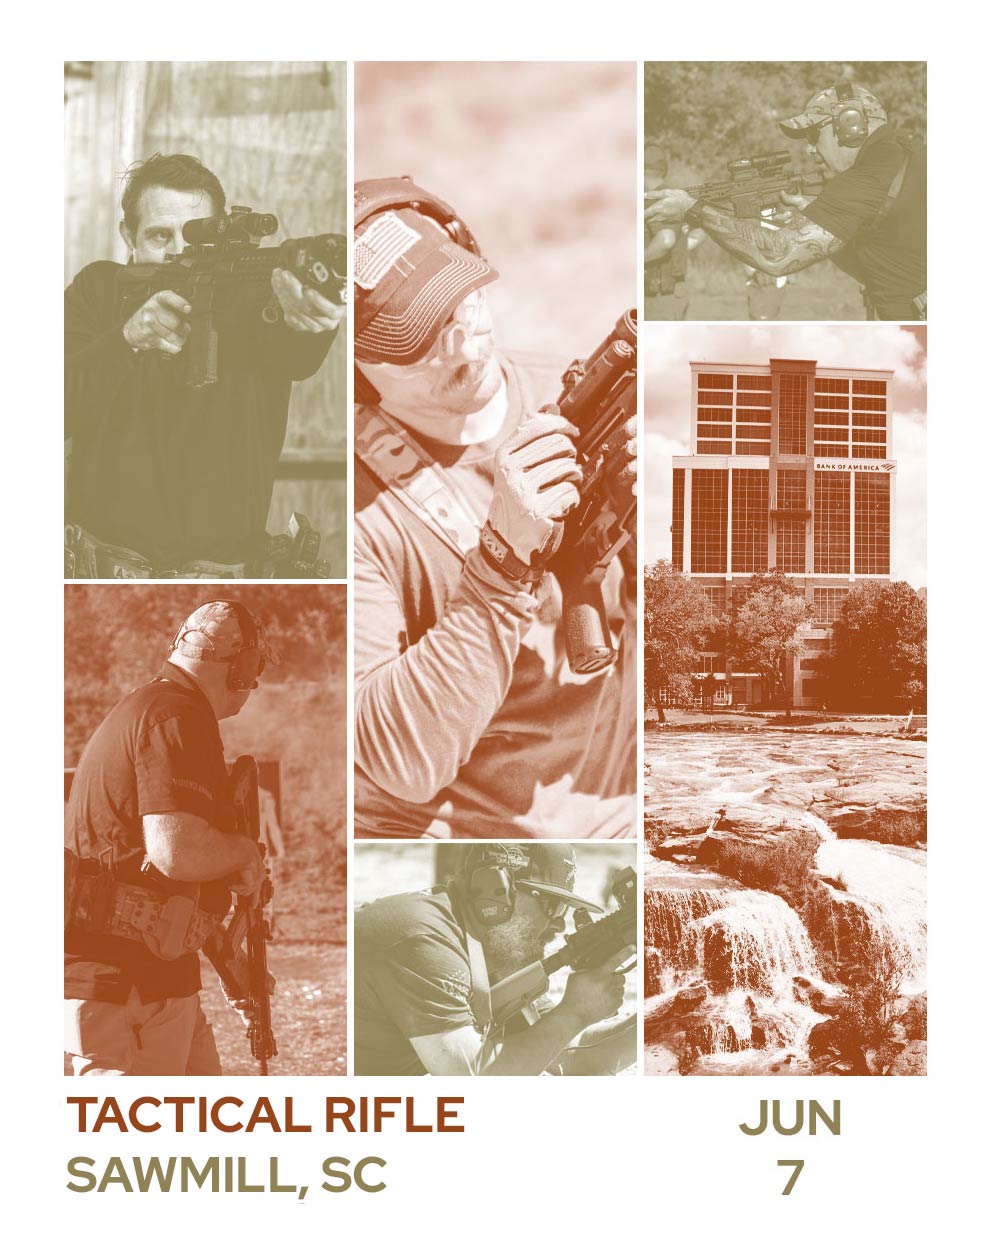 Laurens, SC - Tactical Rifle (June 7, 2024)